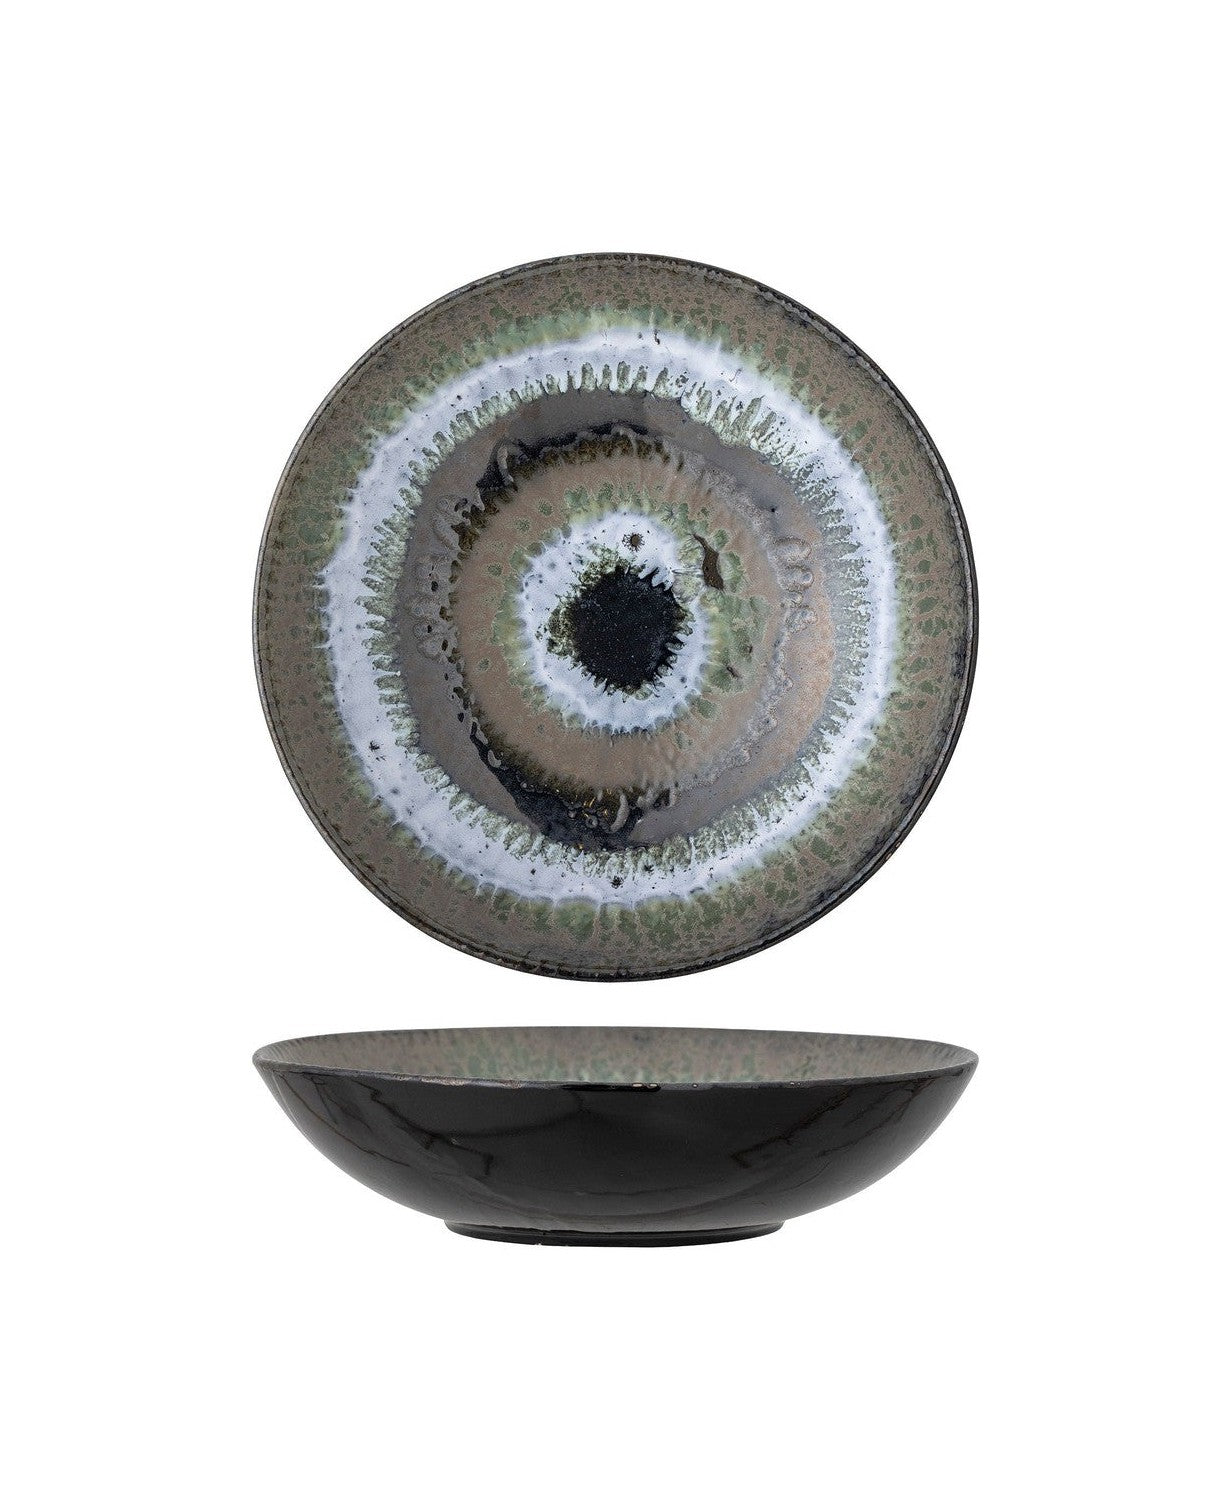 Creative Collection Selim Bowl, Black, Stoneware